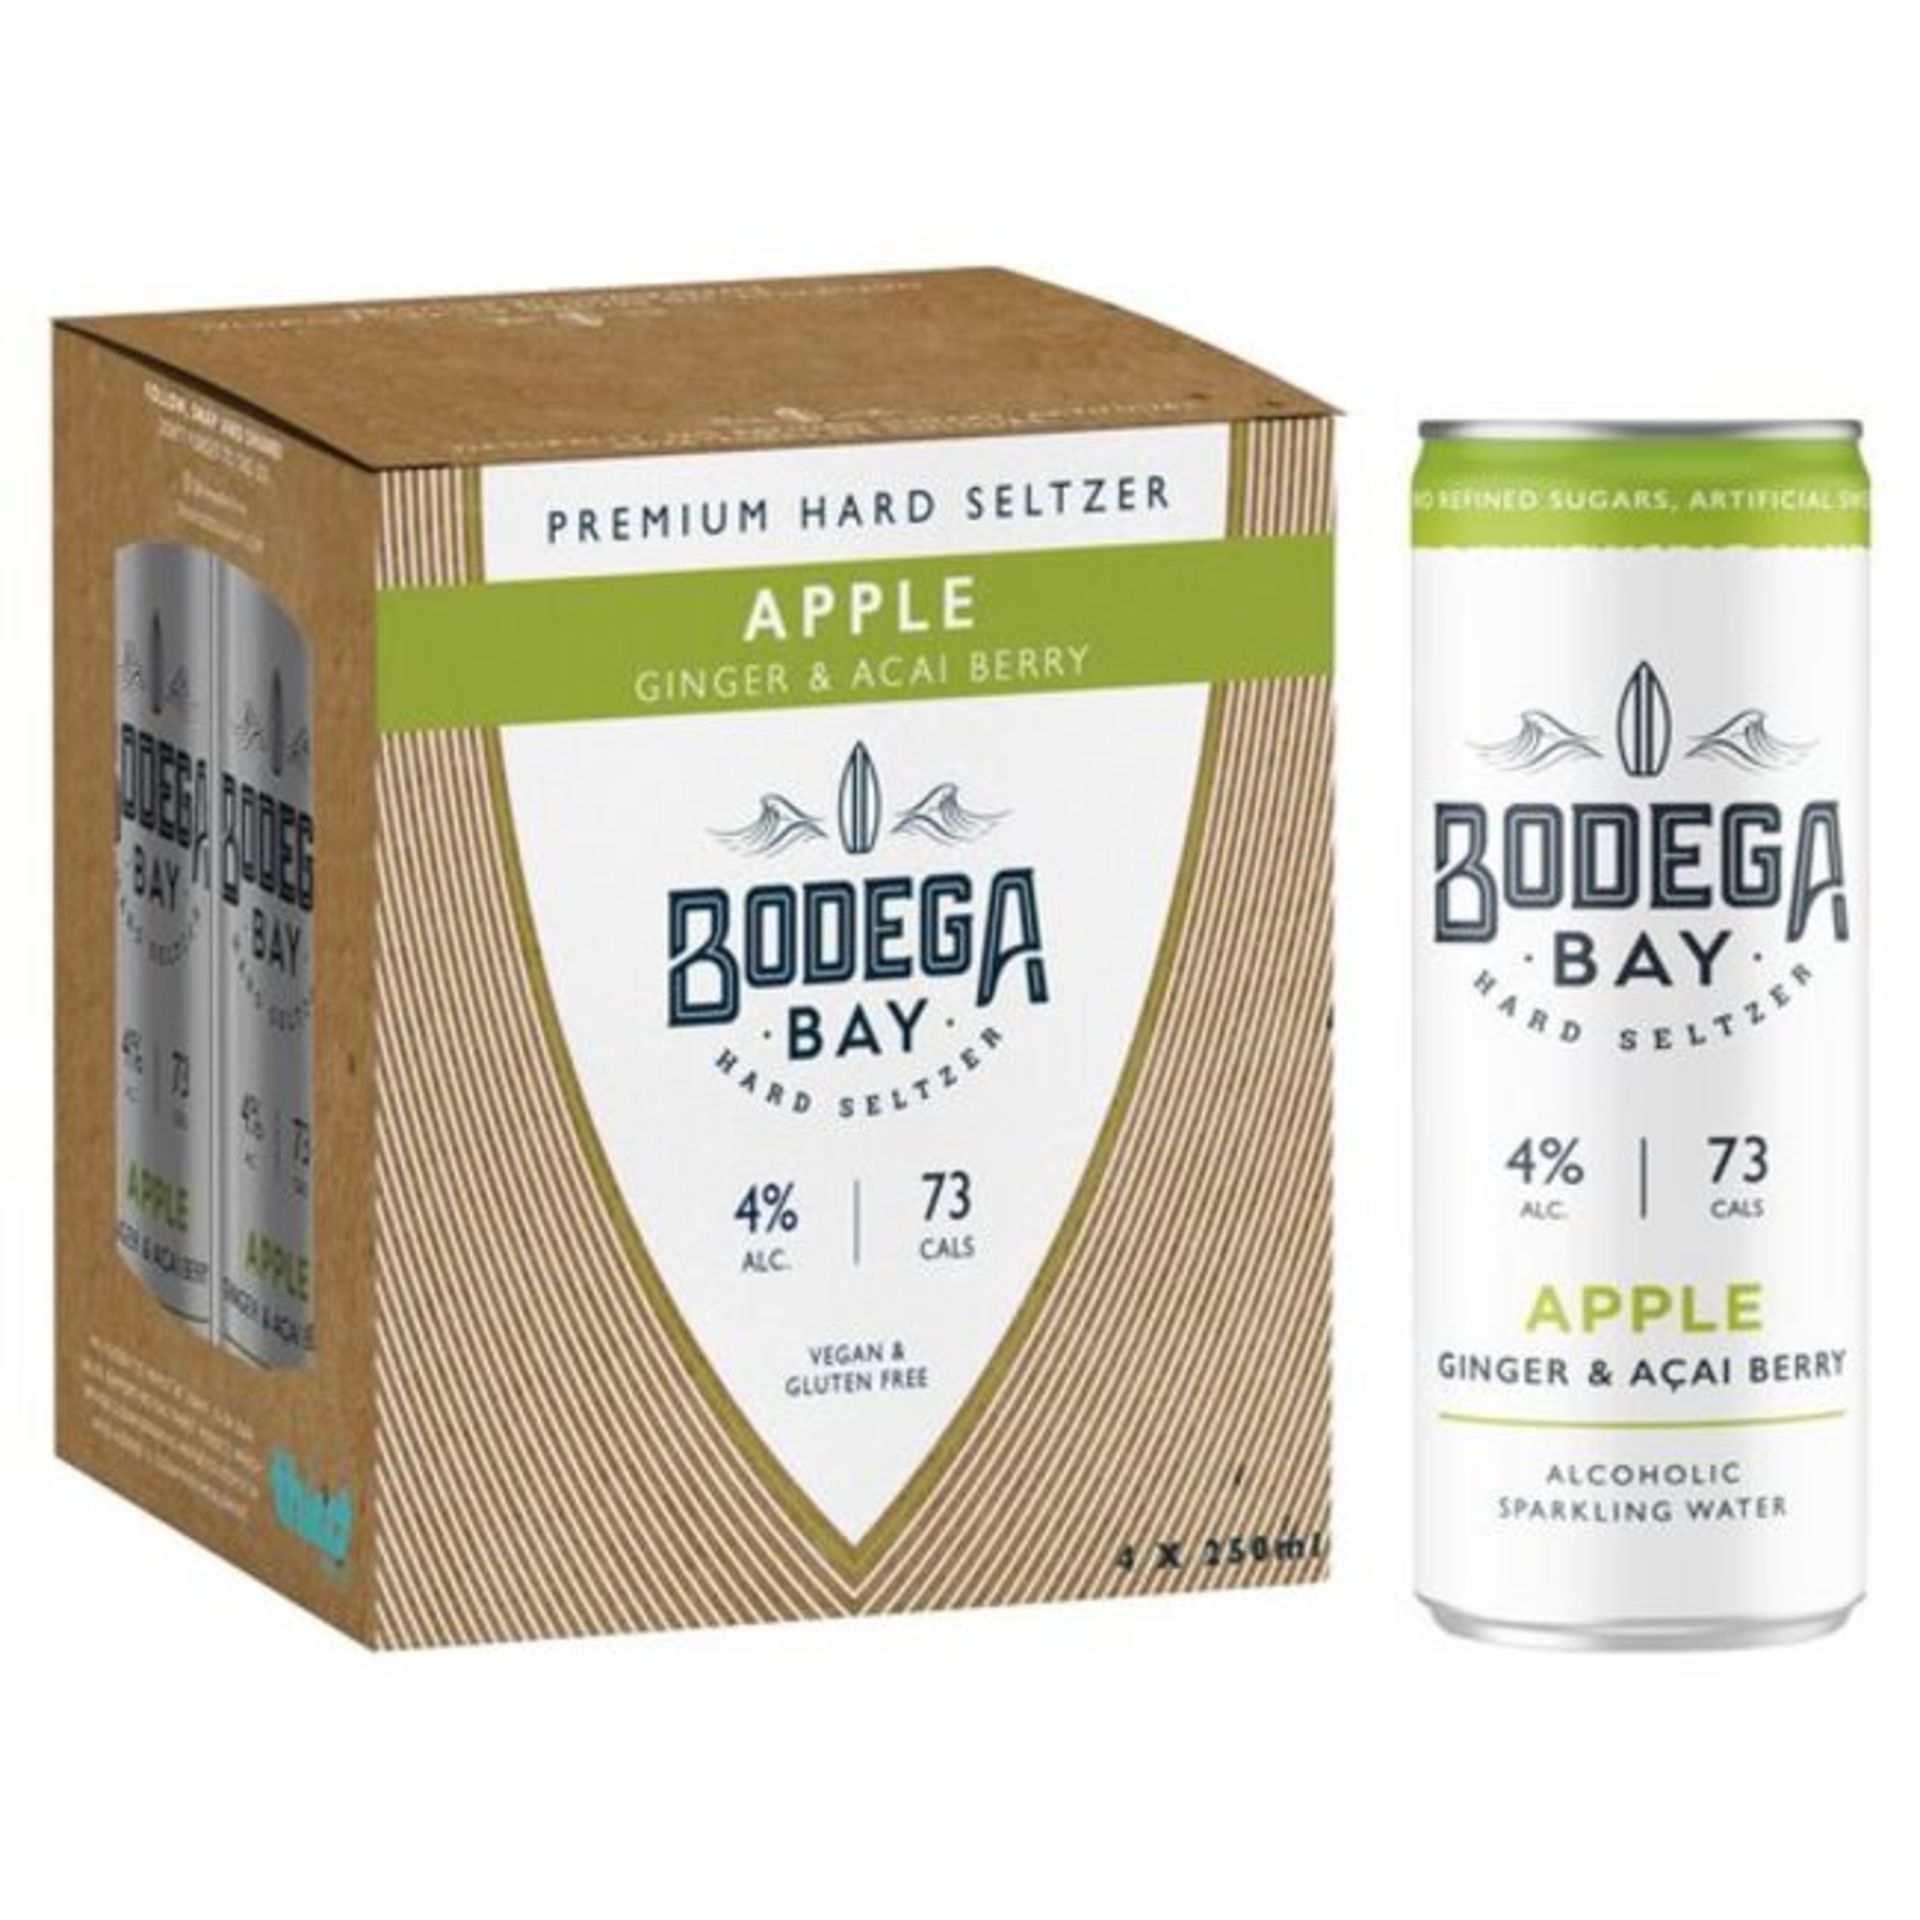 24 x Bodega Bay Hard Seltzer 250ml Alcoholic Sparkling Water Drinks - Apple Ginger & Acai Berry - 4% - Image 3 of 7